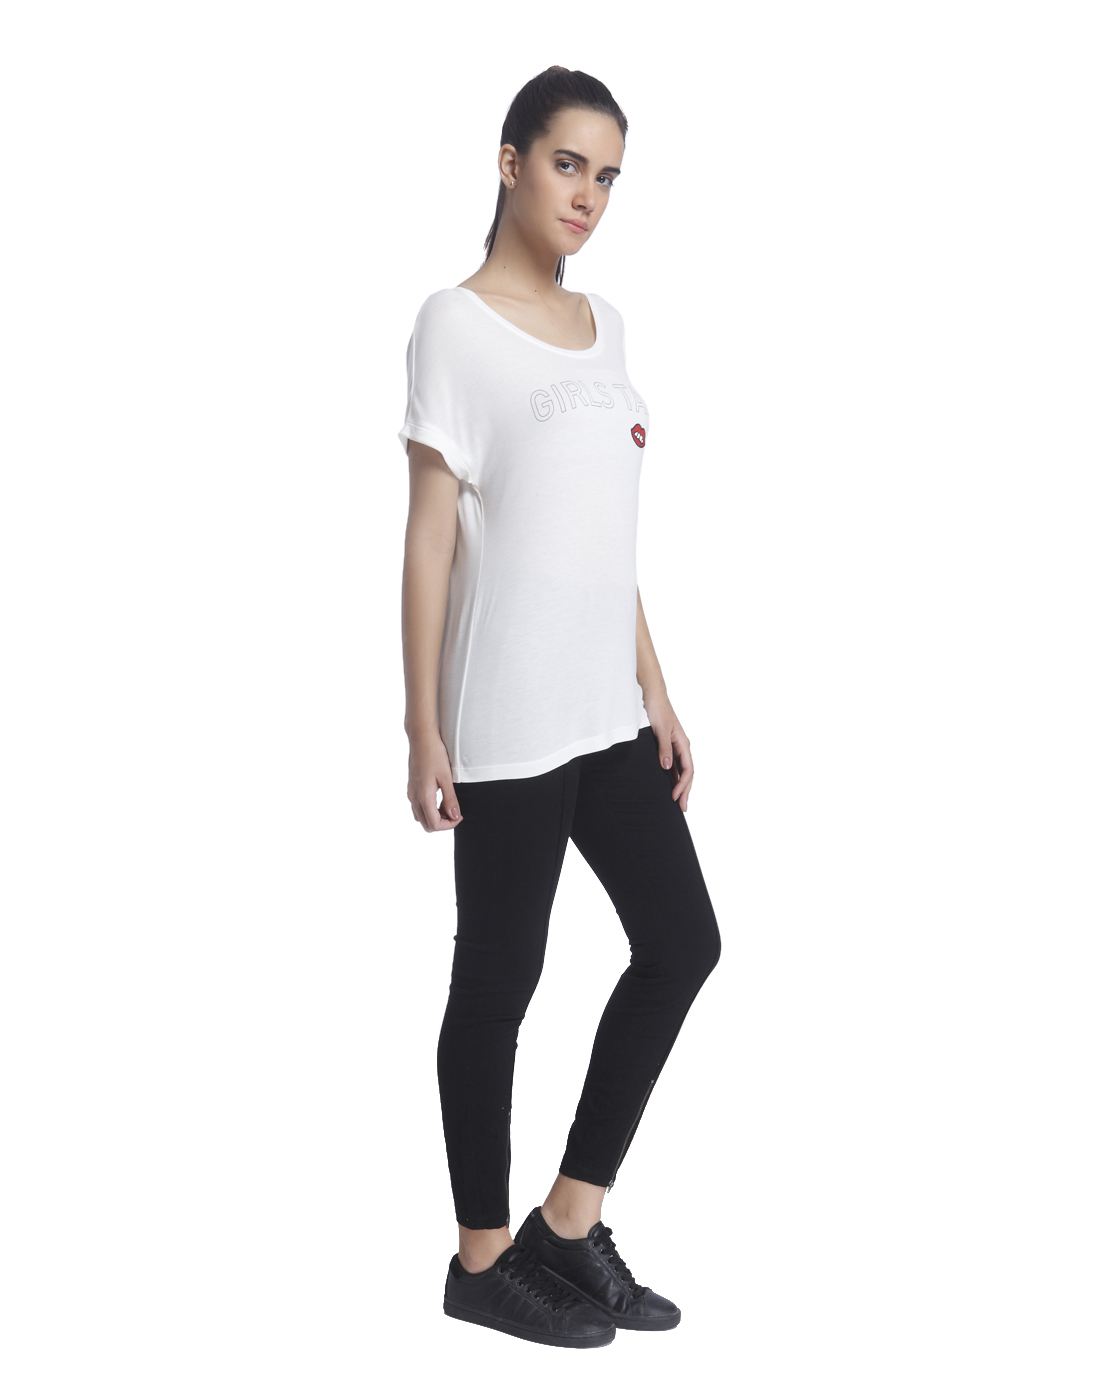 Vero Moda Women Solid Casual Wear White T-Shirt